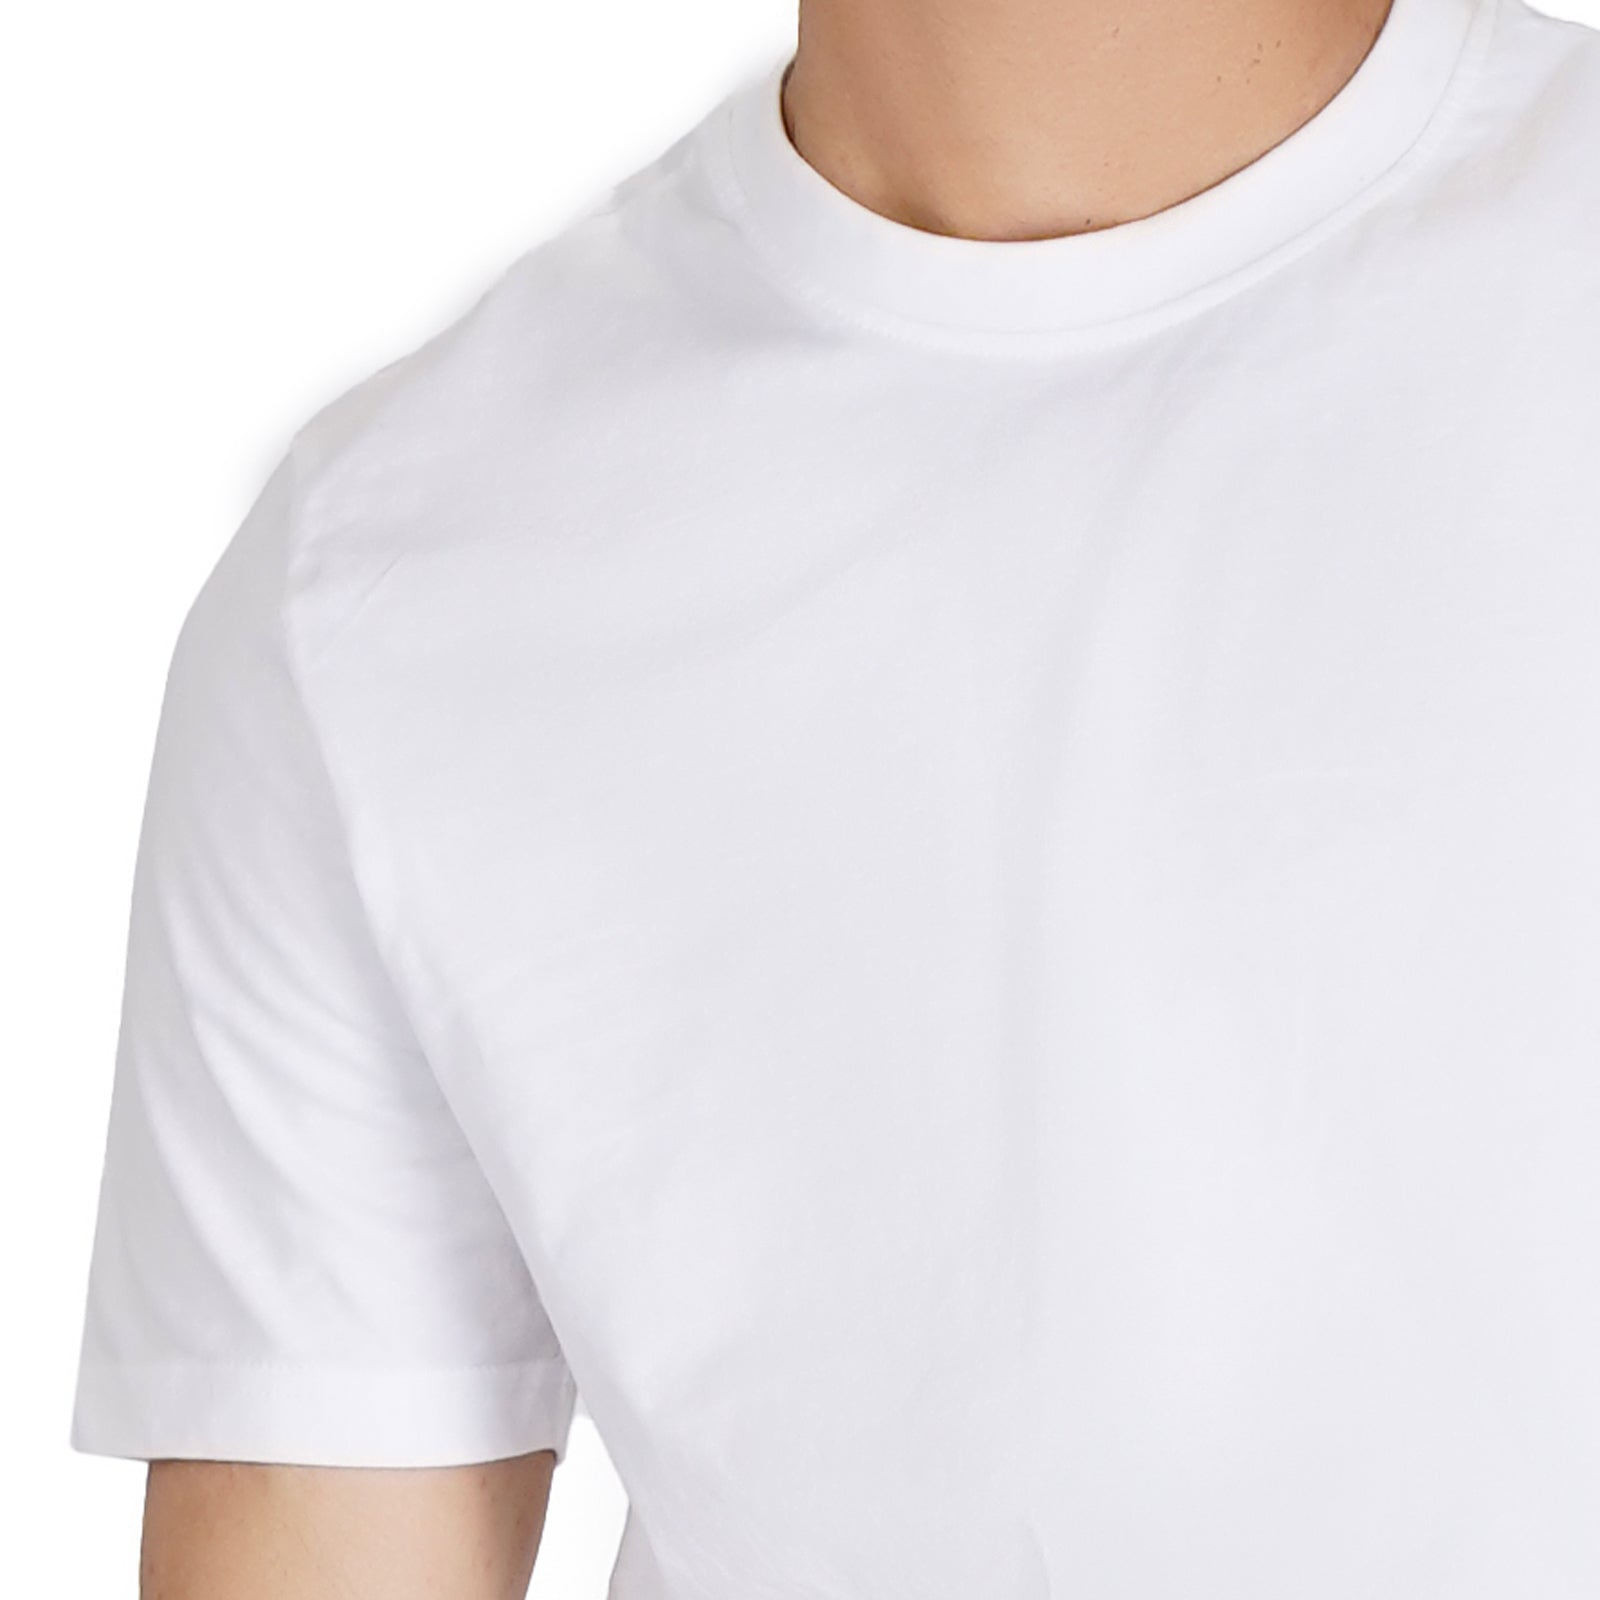 Regular Fit Top White T-Shirt